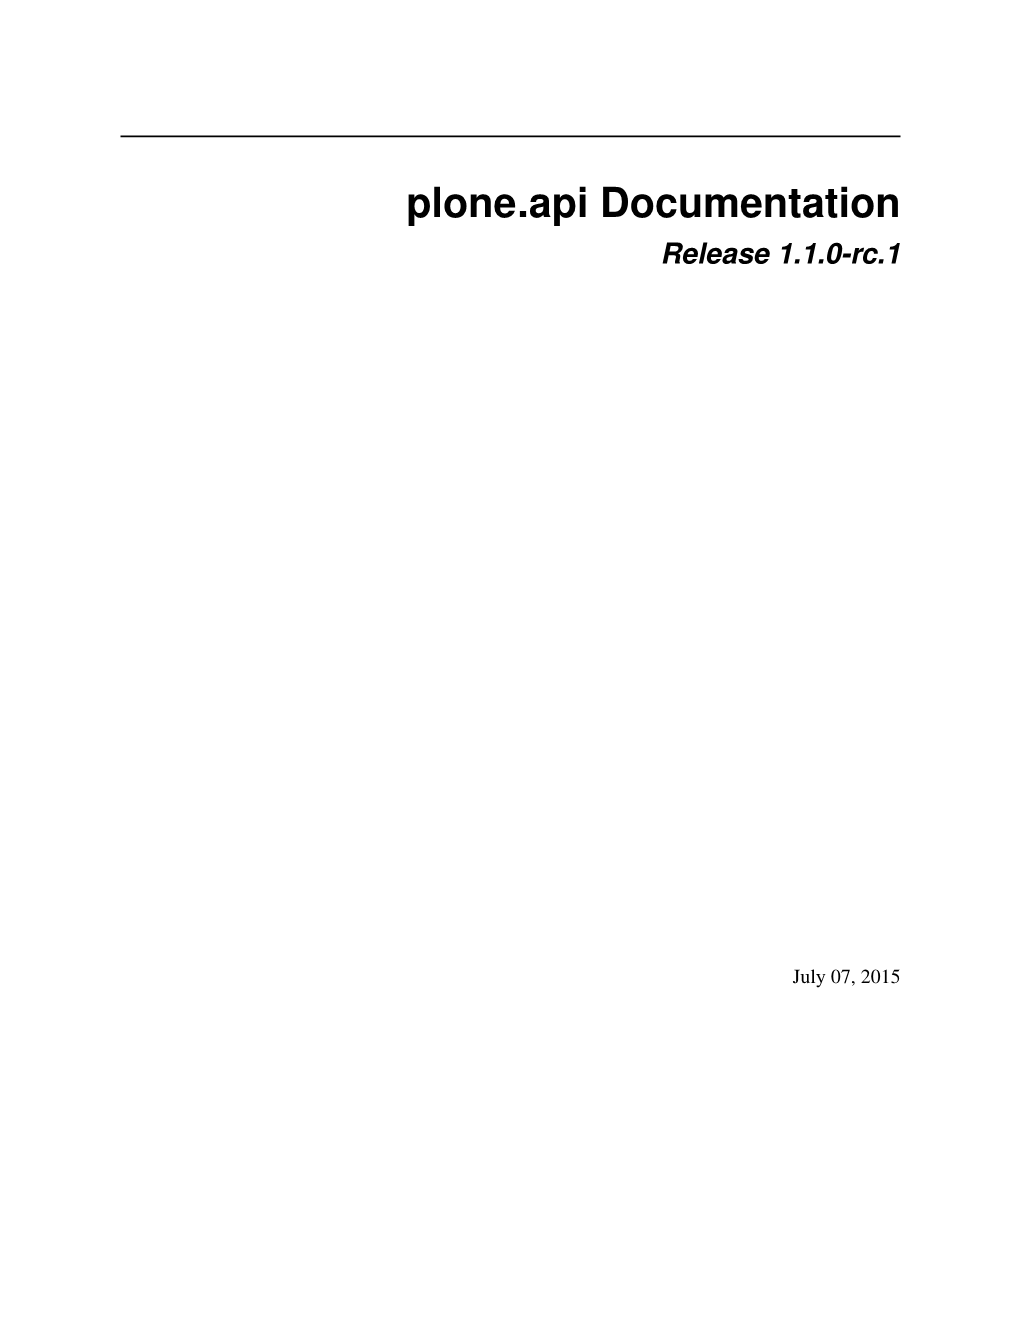 Plone.Api Documentation Release 1.1.0-Rc.1